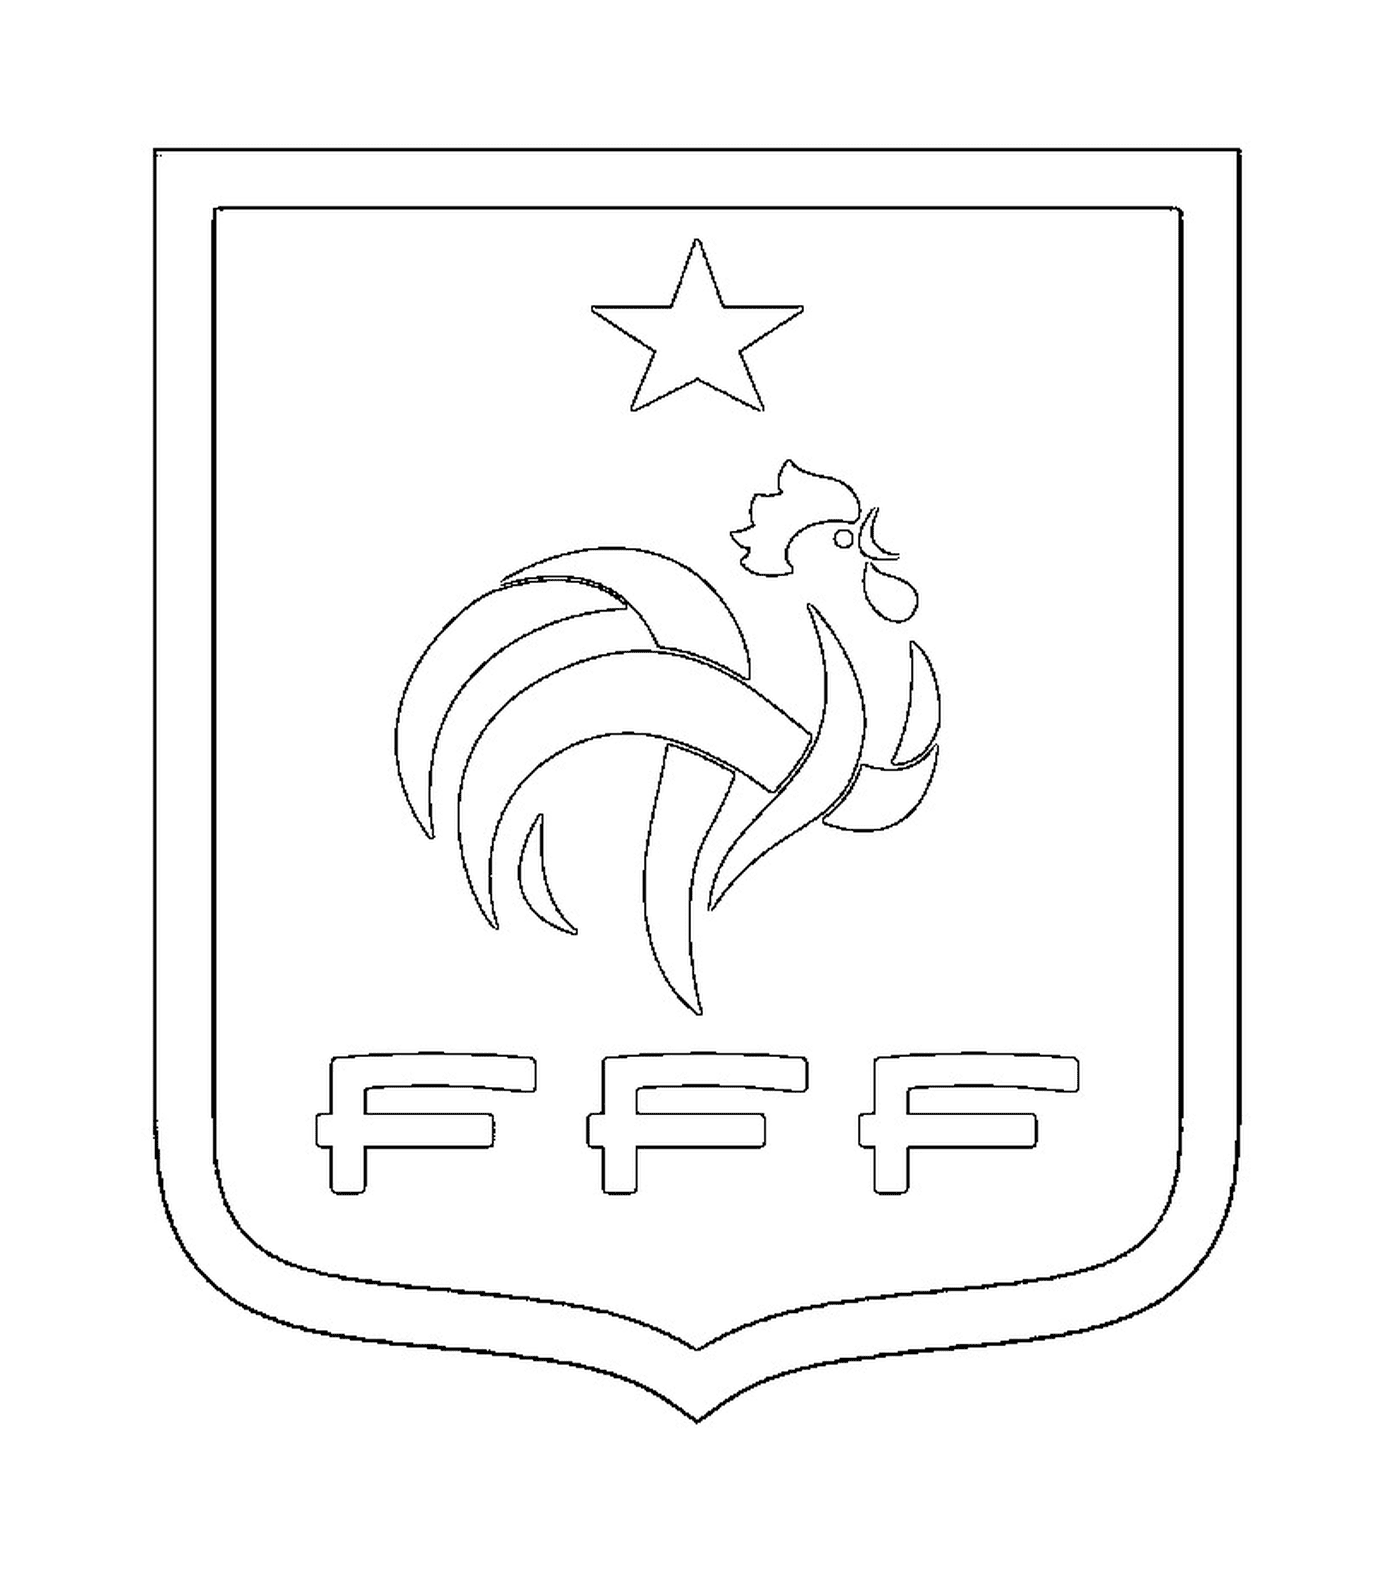   Football en France, logo FFF 